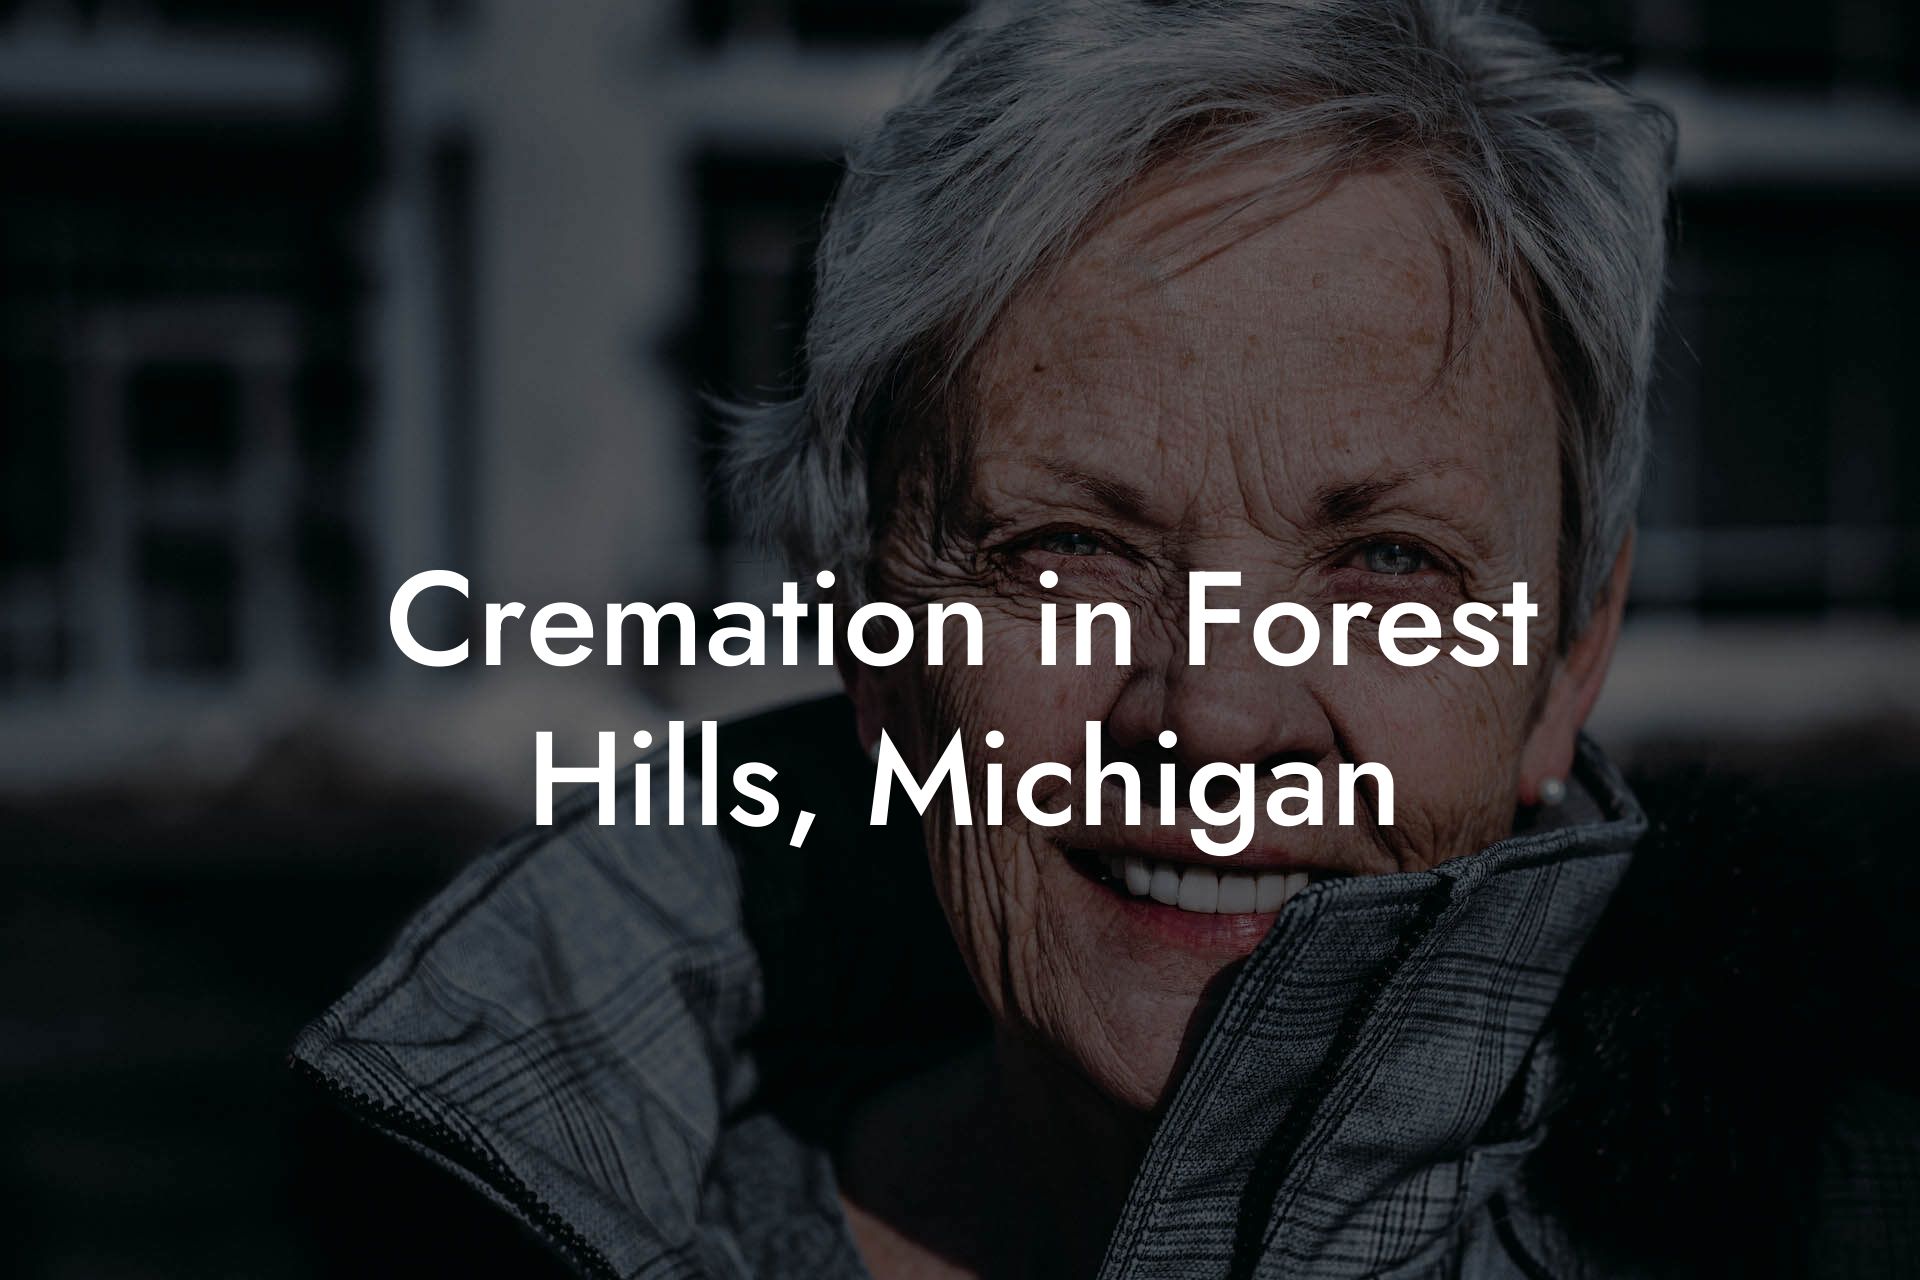 Cremation in Forest Hills, Michigan